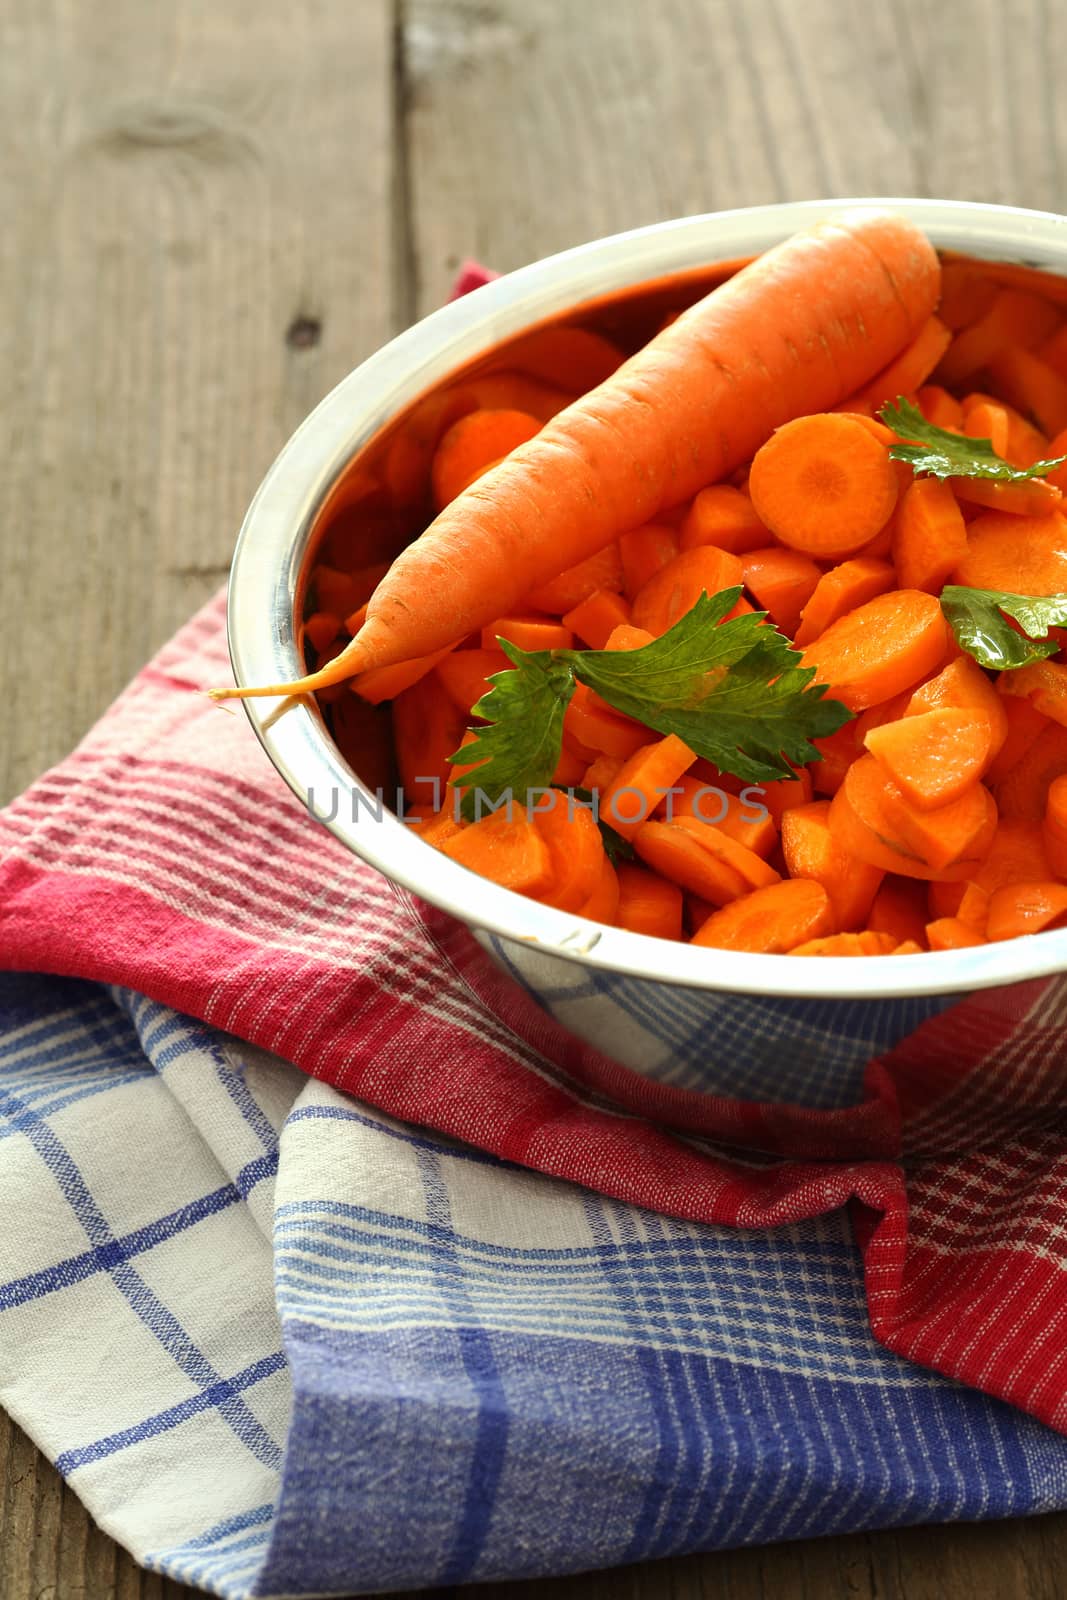 chopped carrots by alexkosev